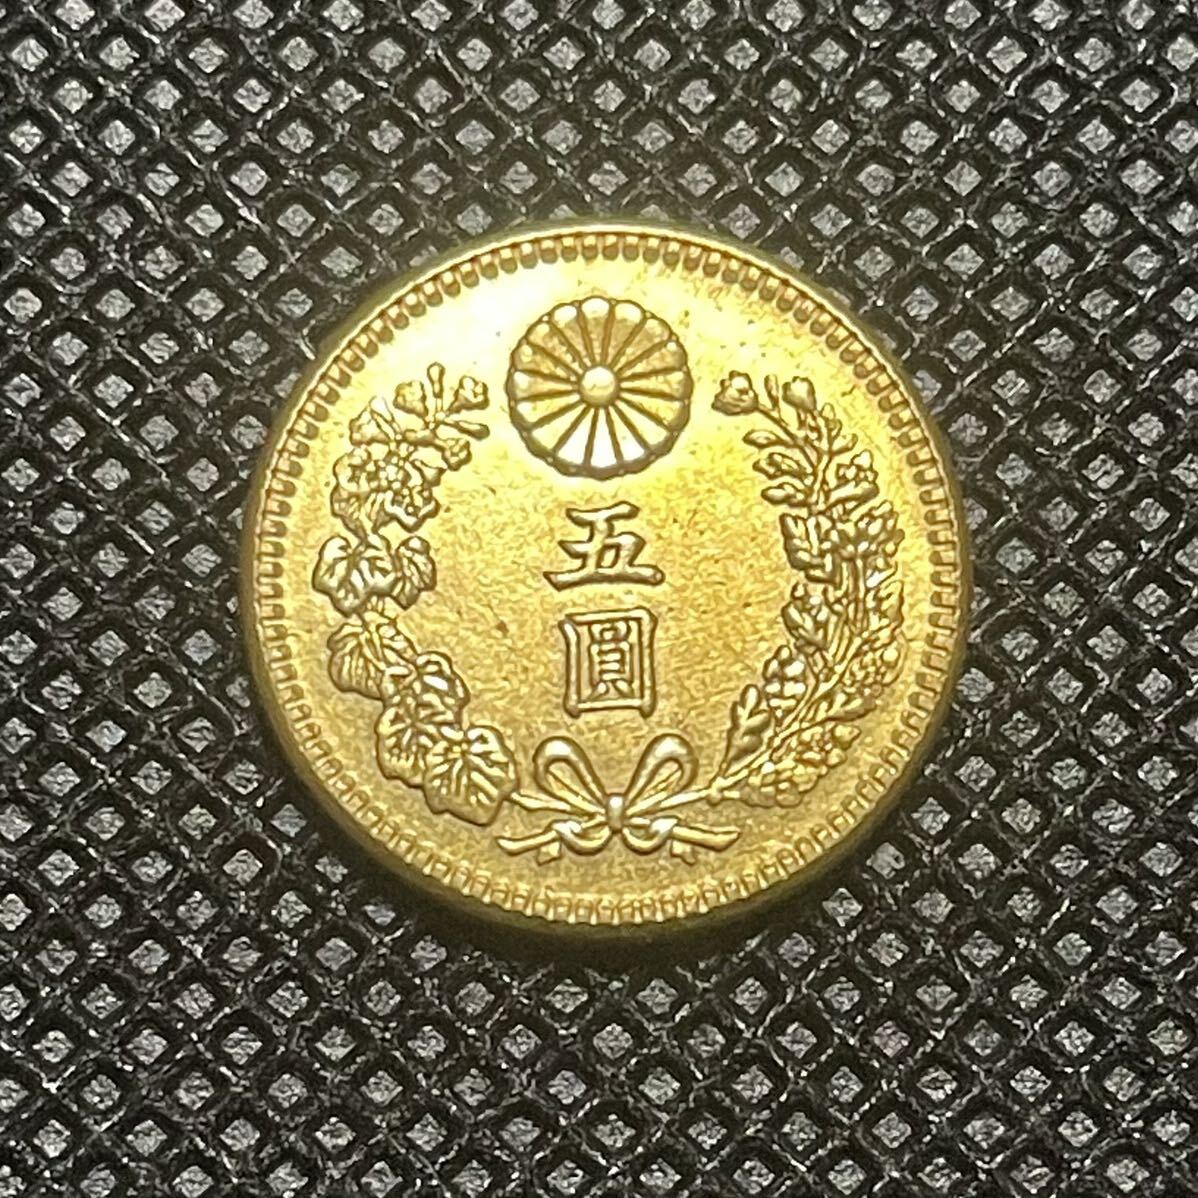  modern times money new 5 jpy gold coin Meiji 30 year antique 